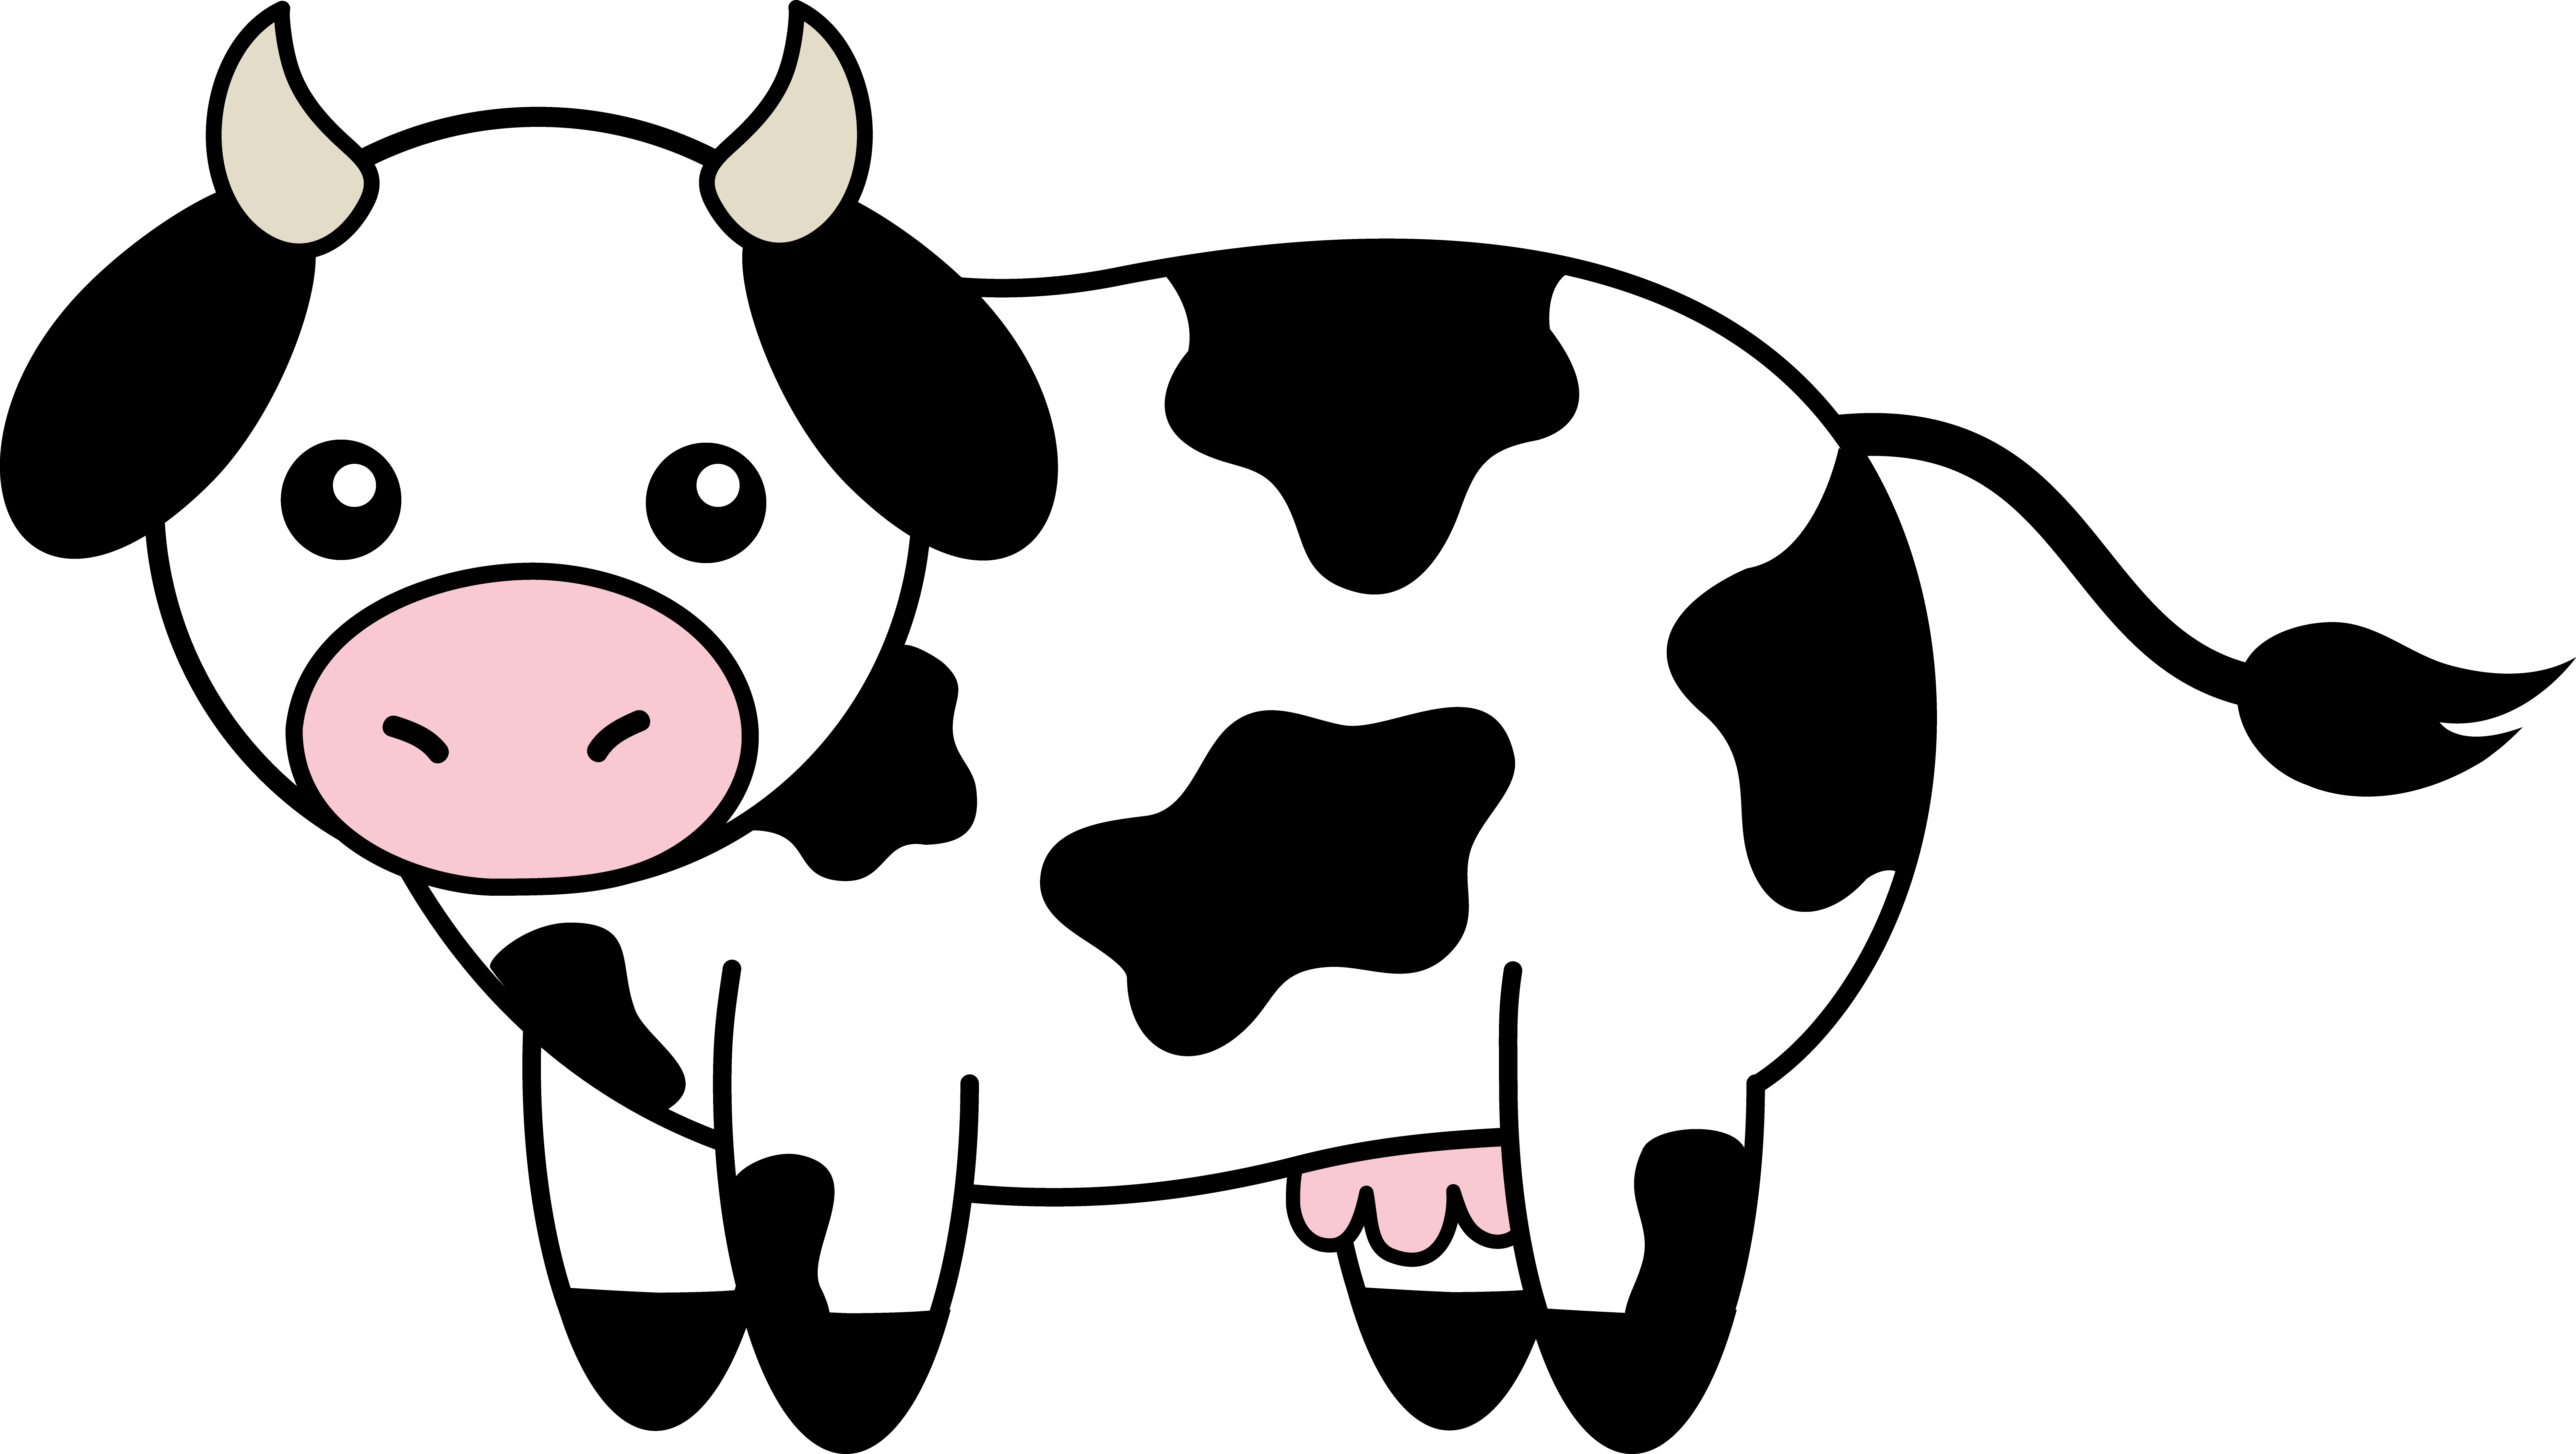 Cow head clipart black and white ffa